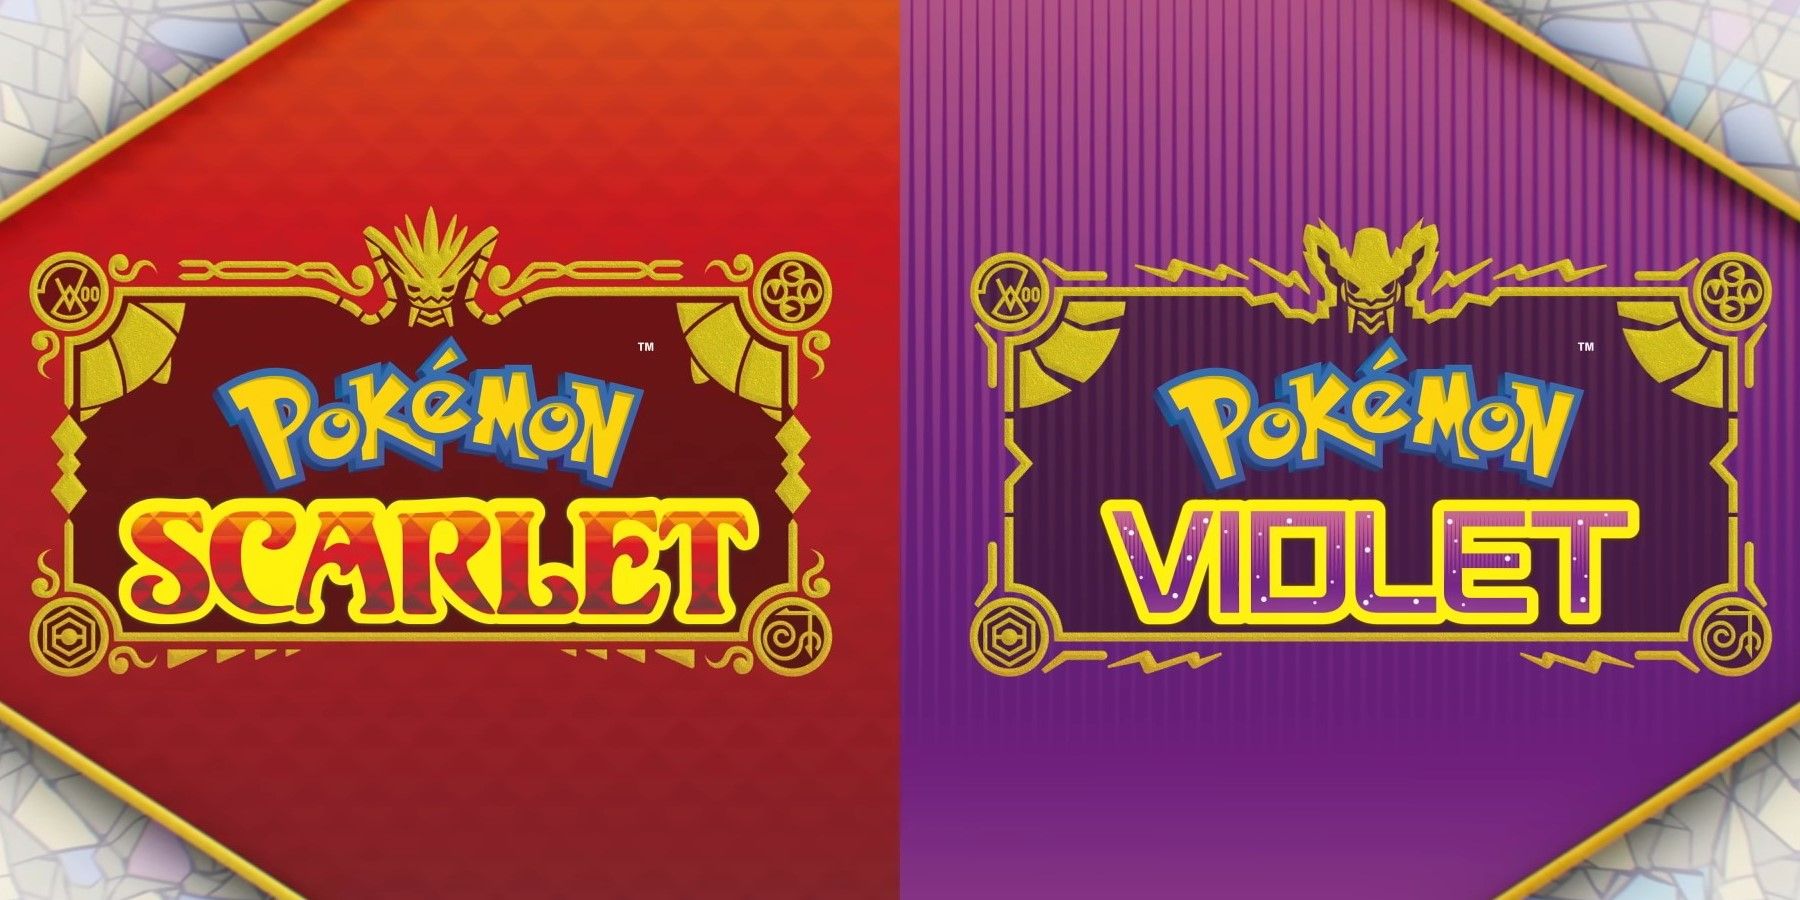 MEW MEWTWO 6IV Legendaries / Pokemon Scarlet and Violet / 